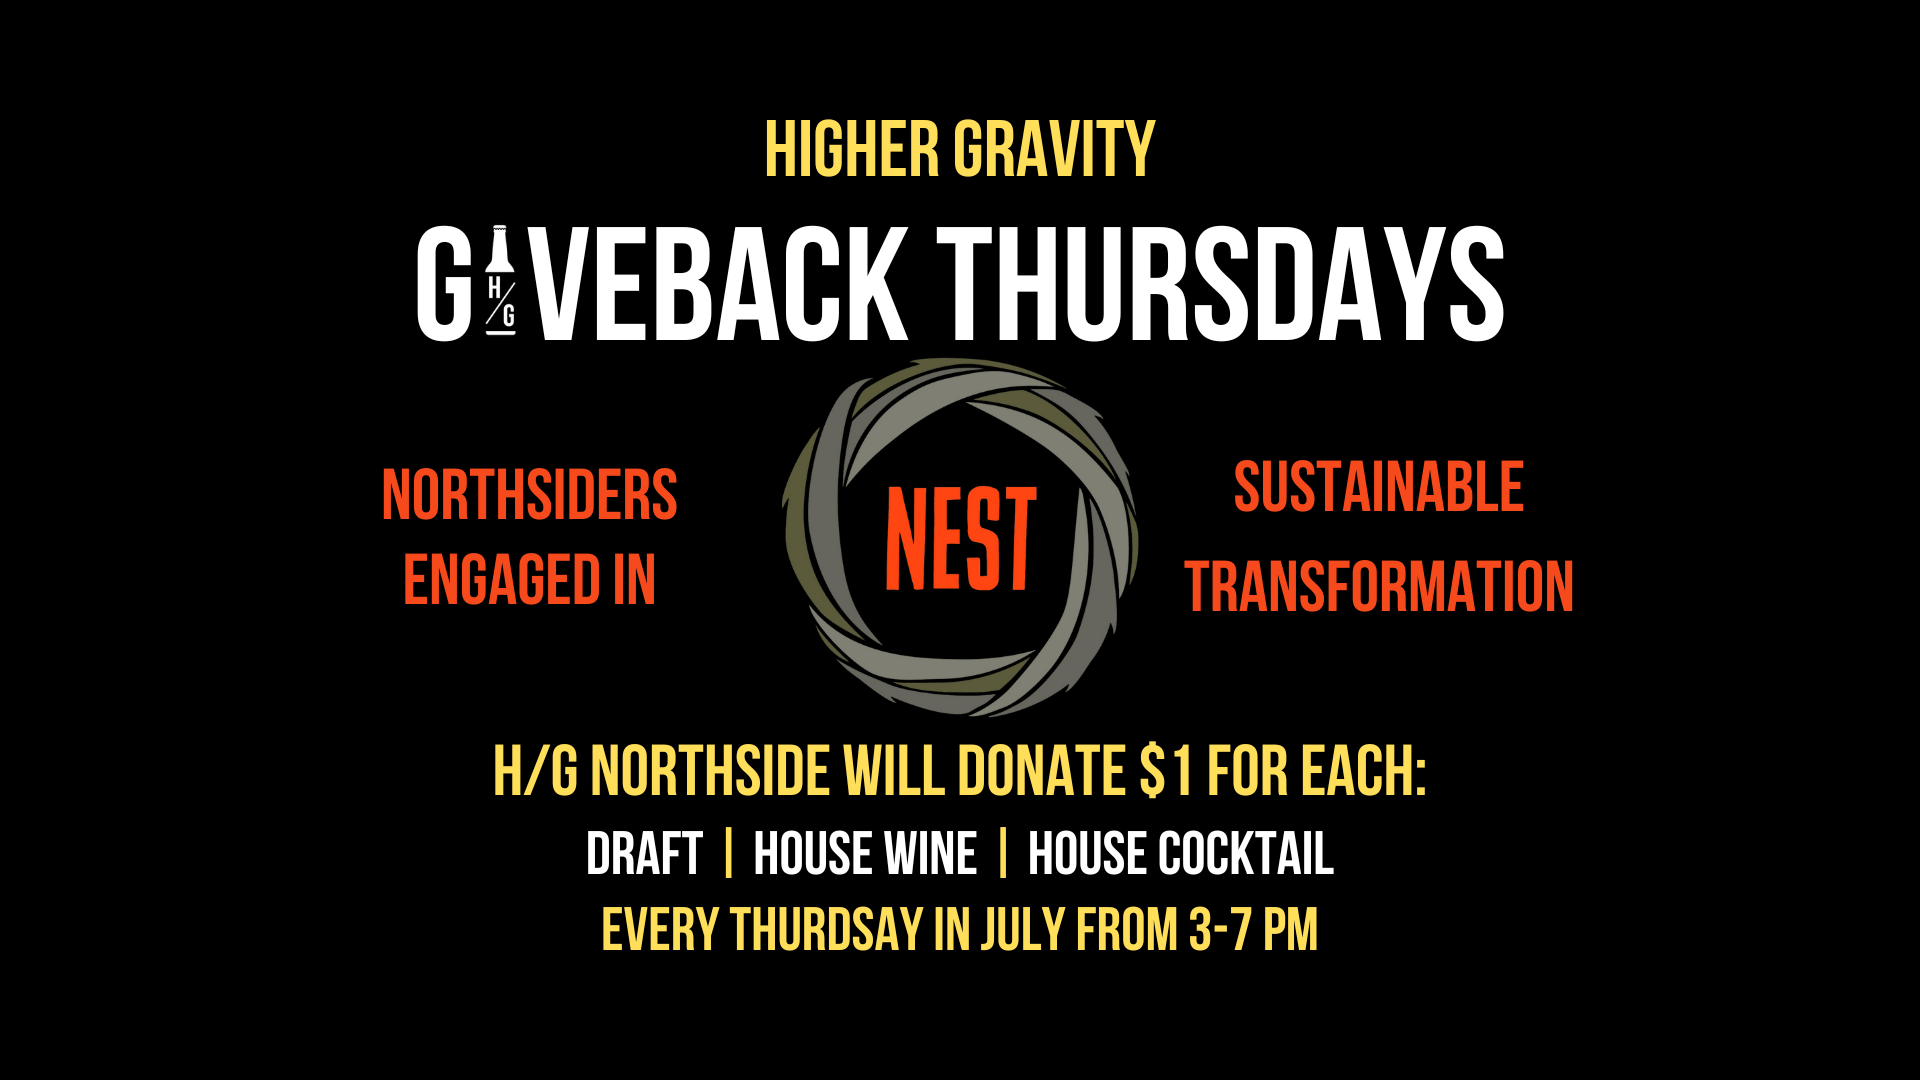 Giveback Thursdays at Higher Gravity in Northside